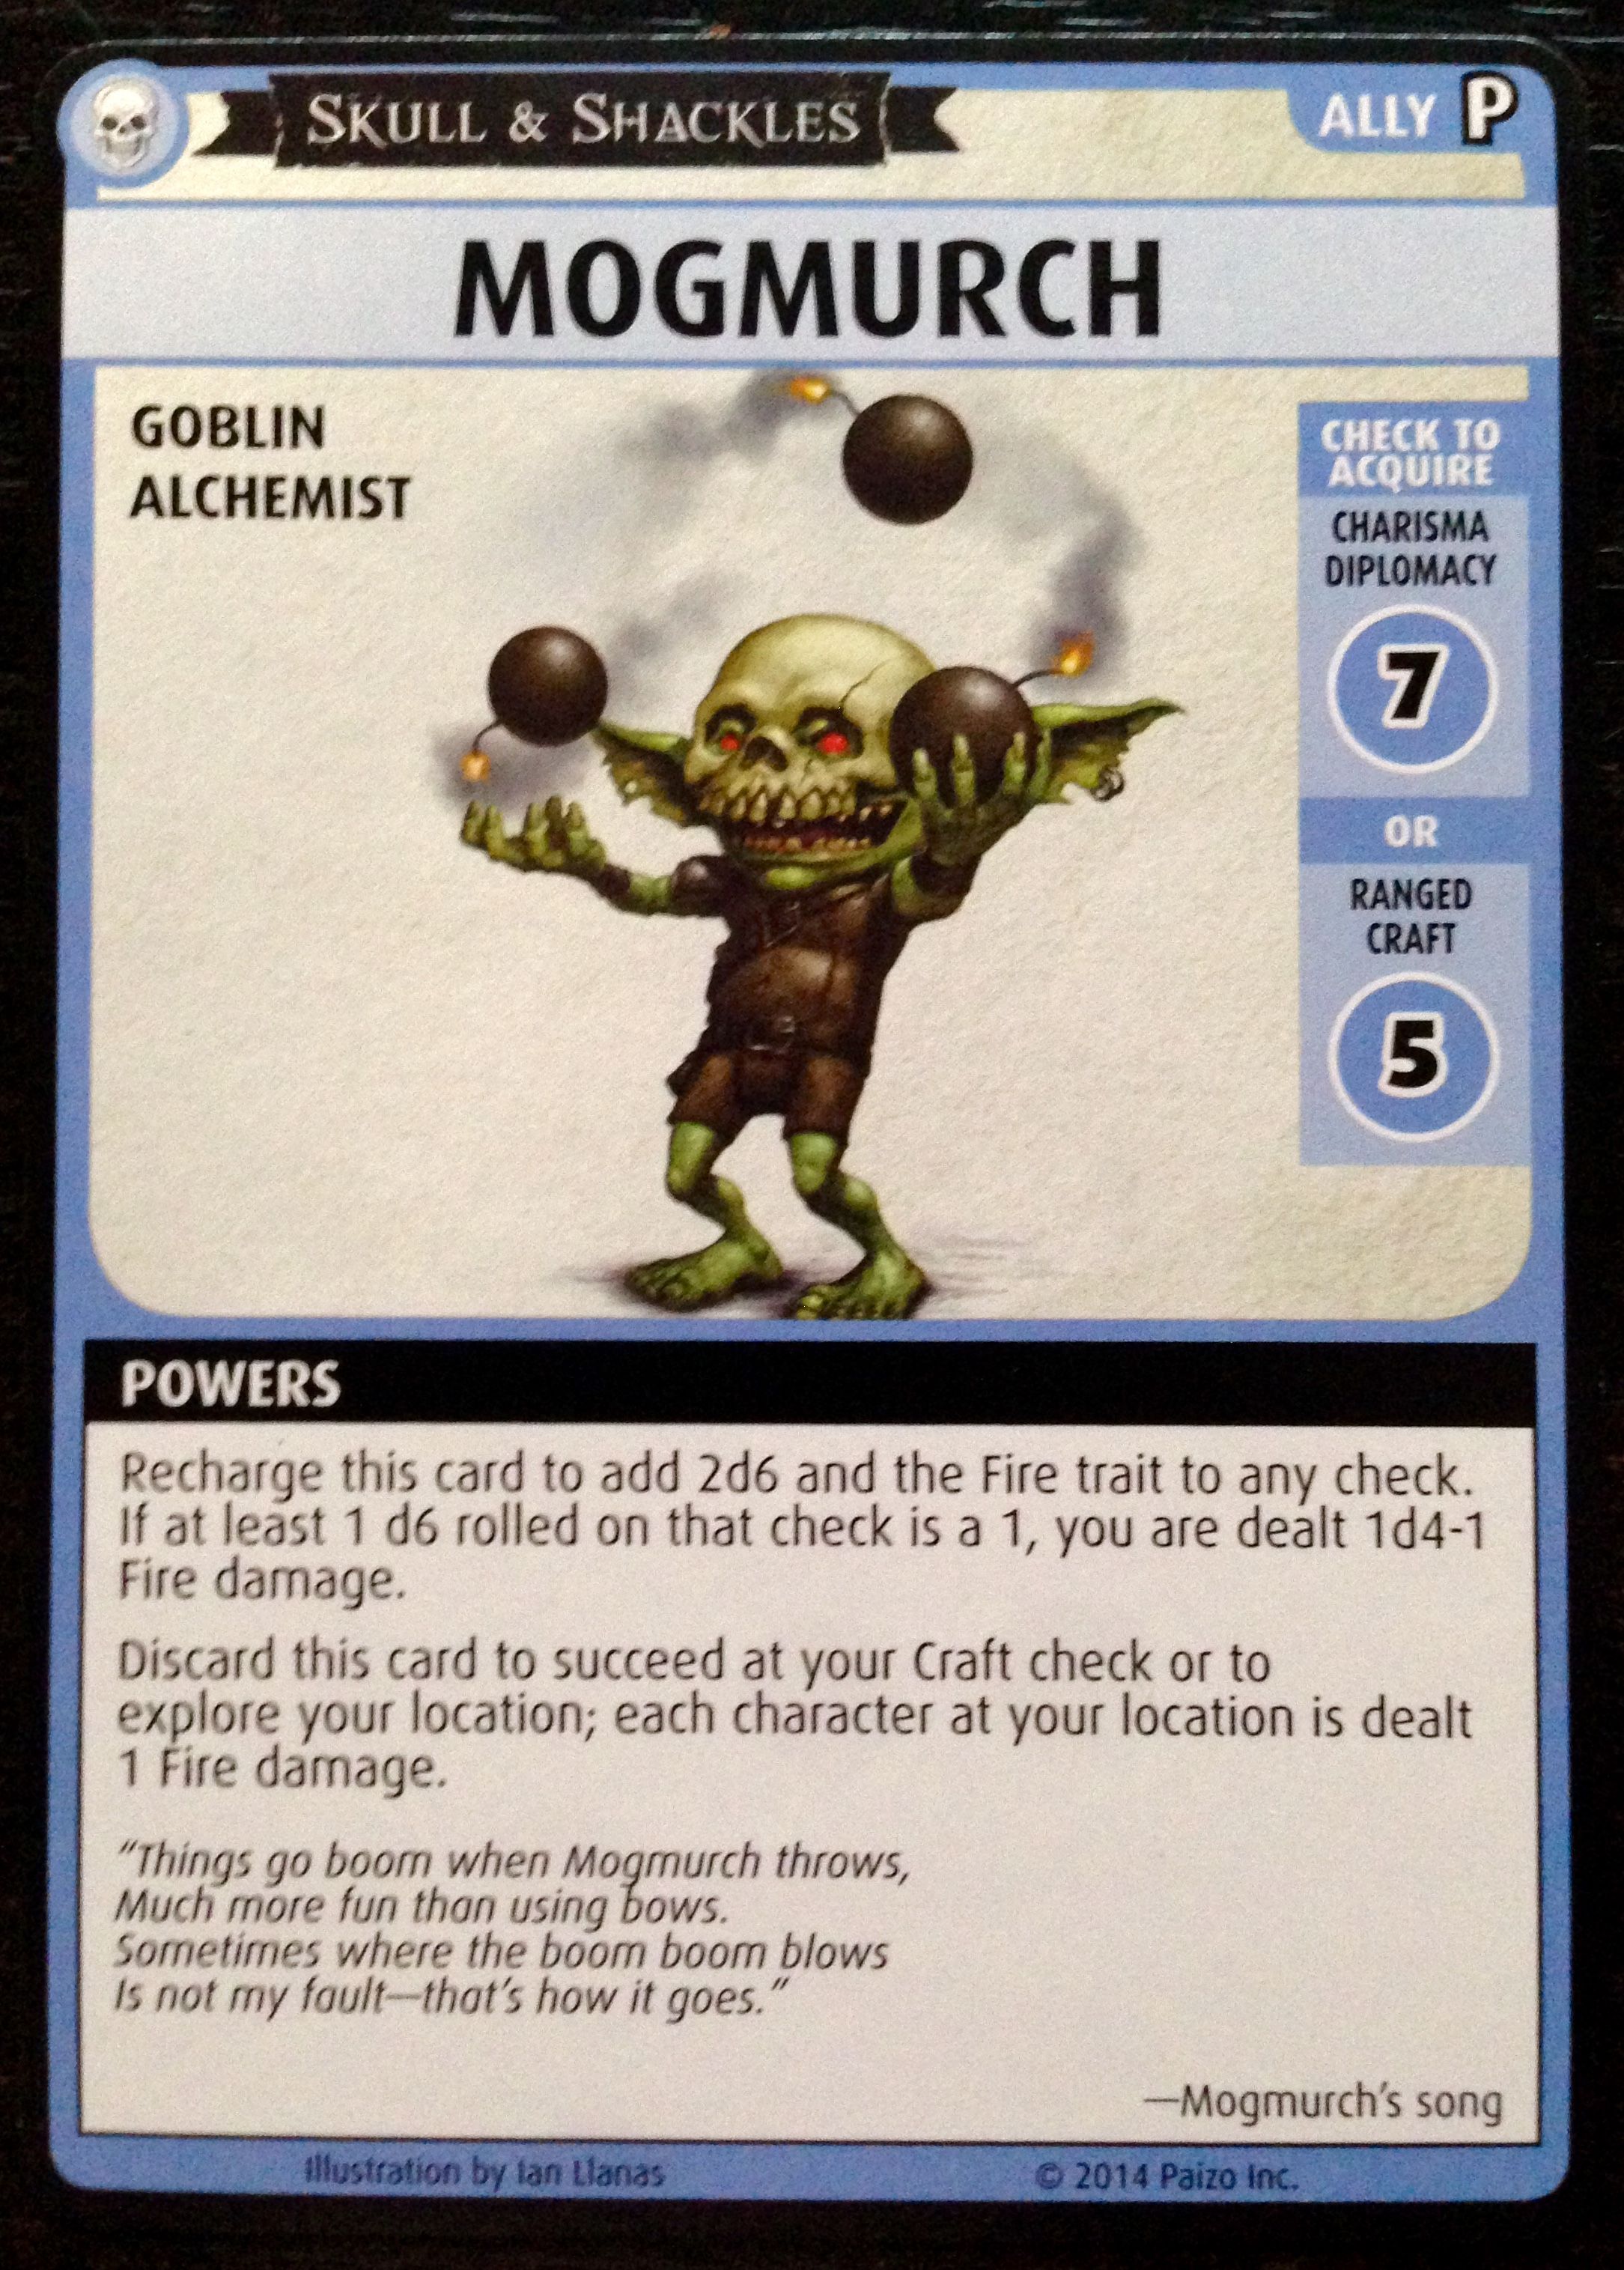 Pathfinder Adventure Card Game: Skull & Shackles – "Mogmurch" Promo Card